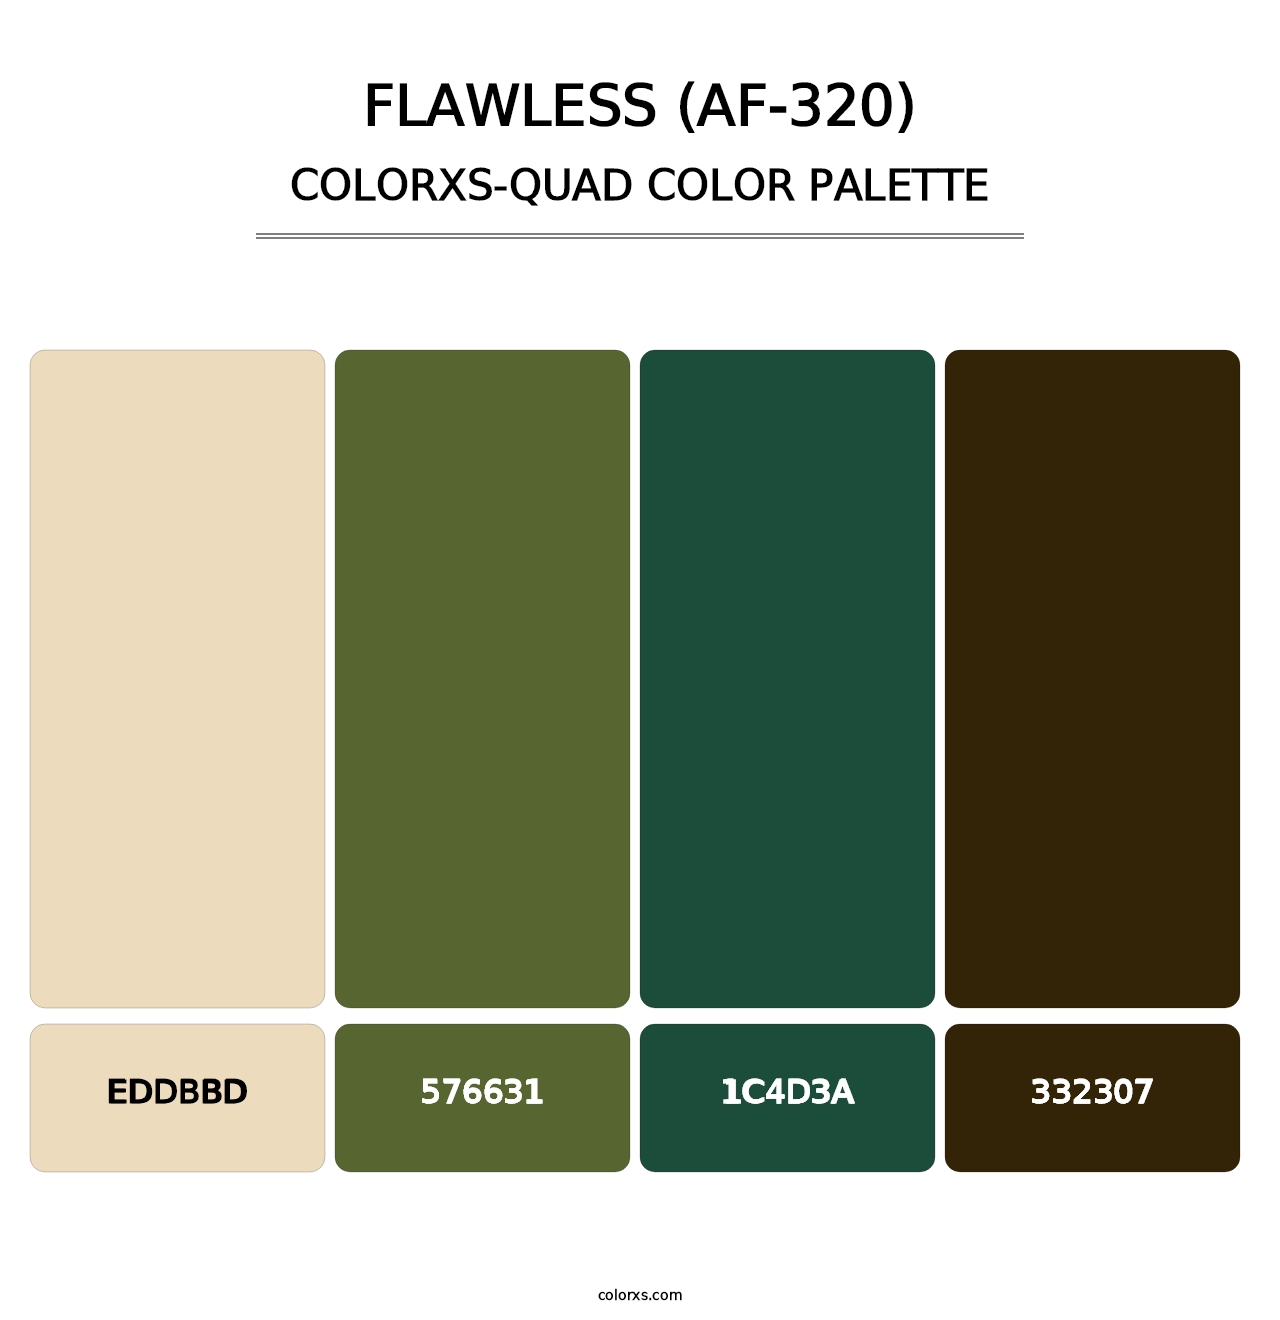 Flawless (AF-320) - Colorxs Quad Palette